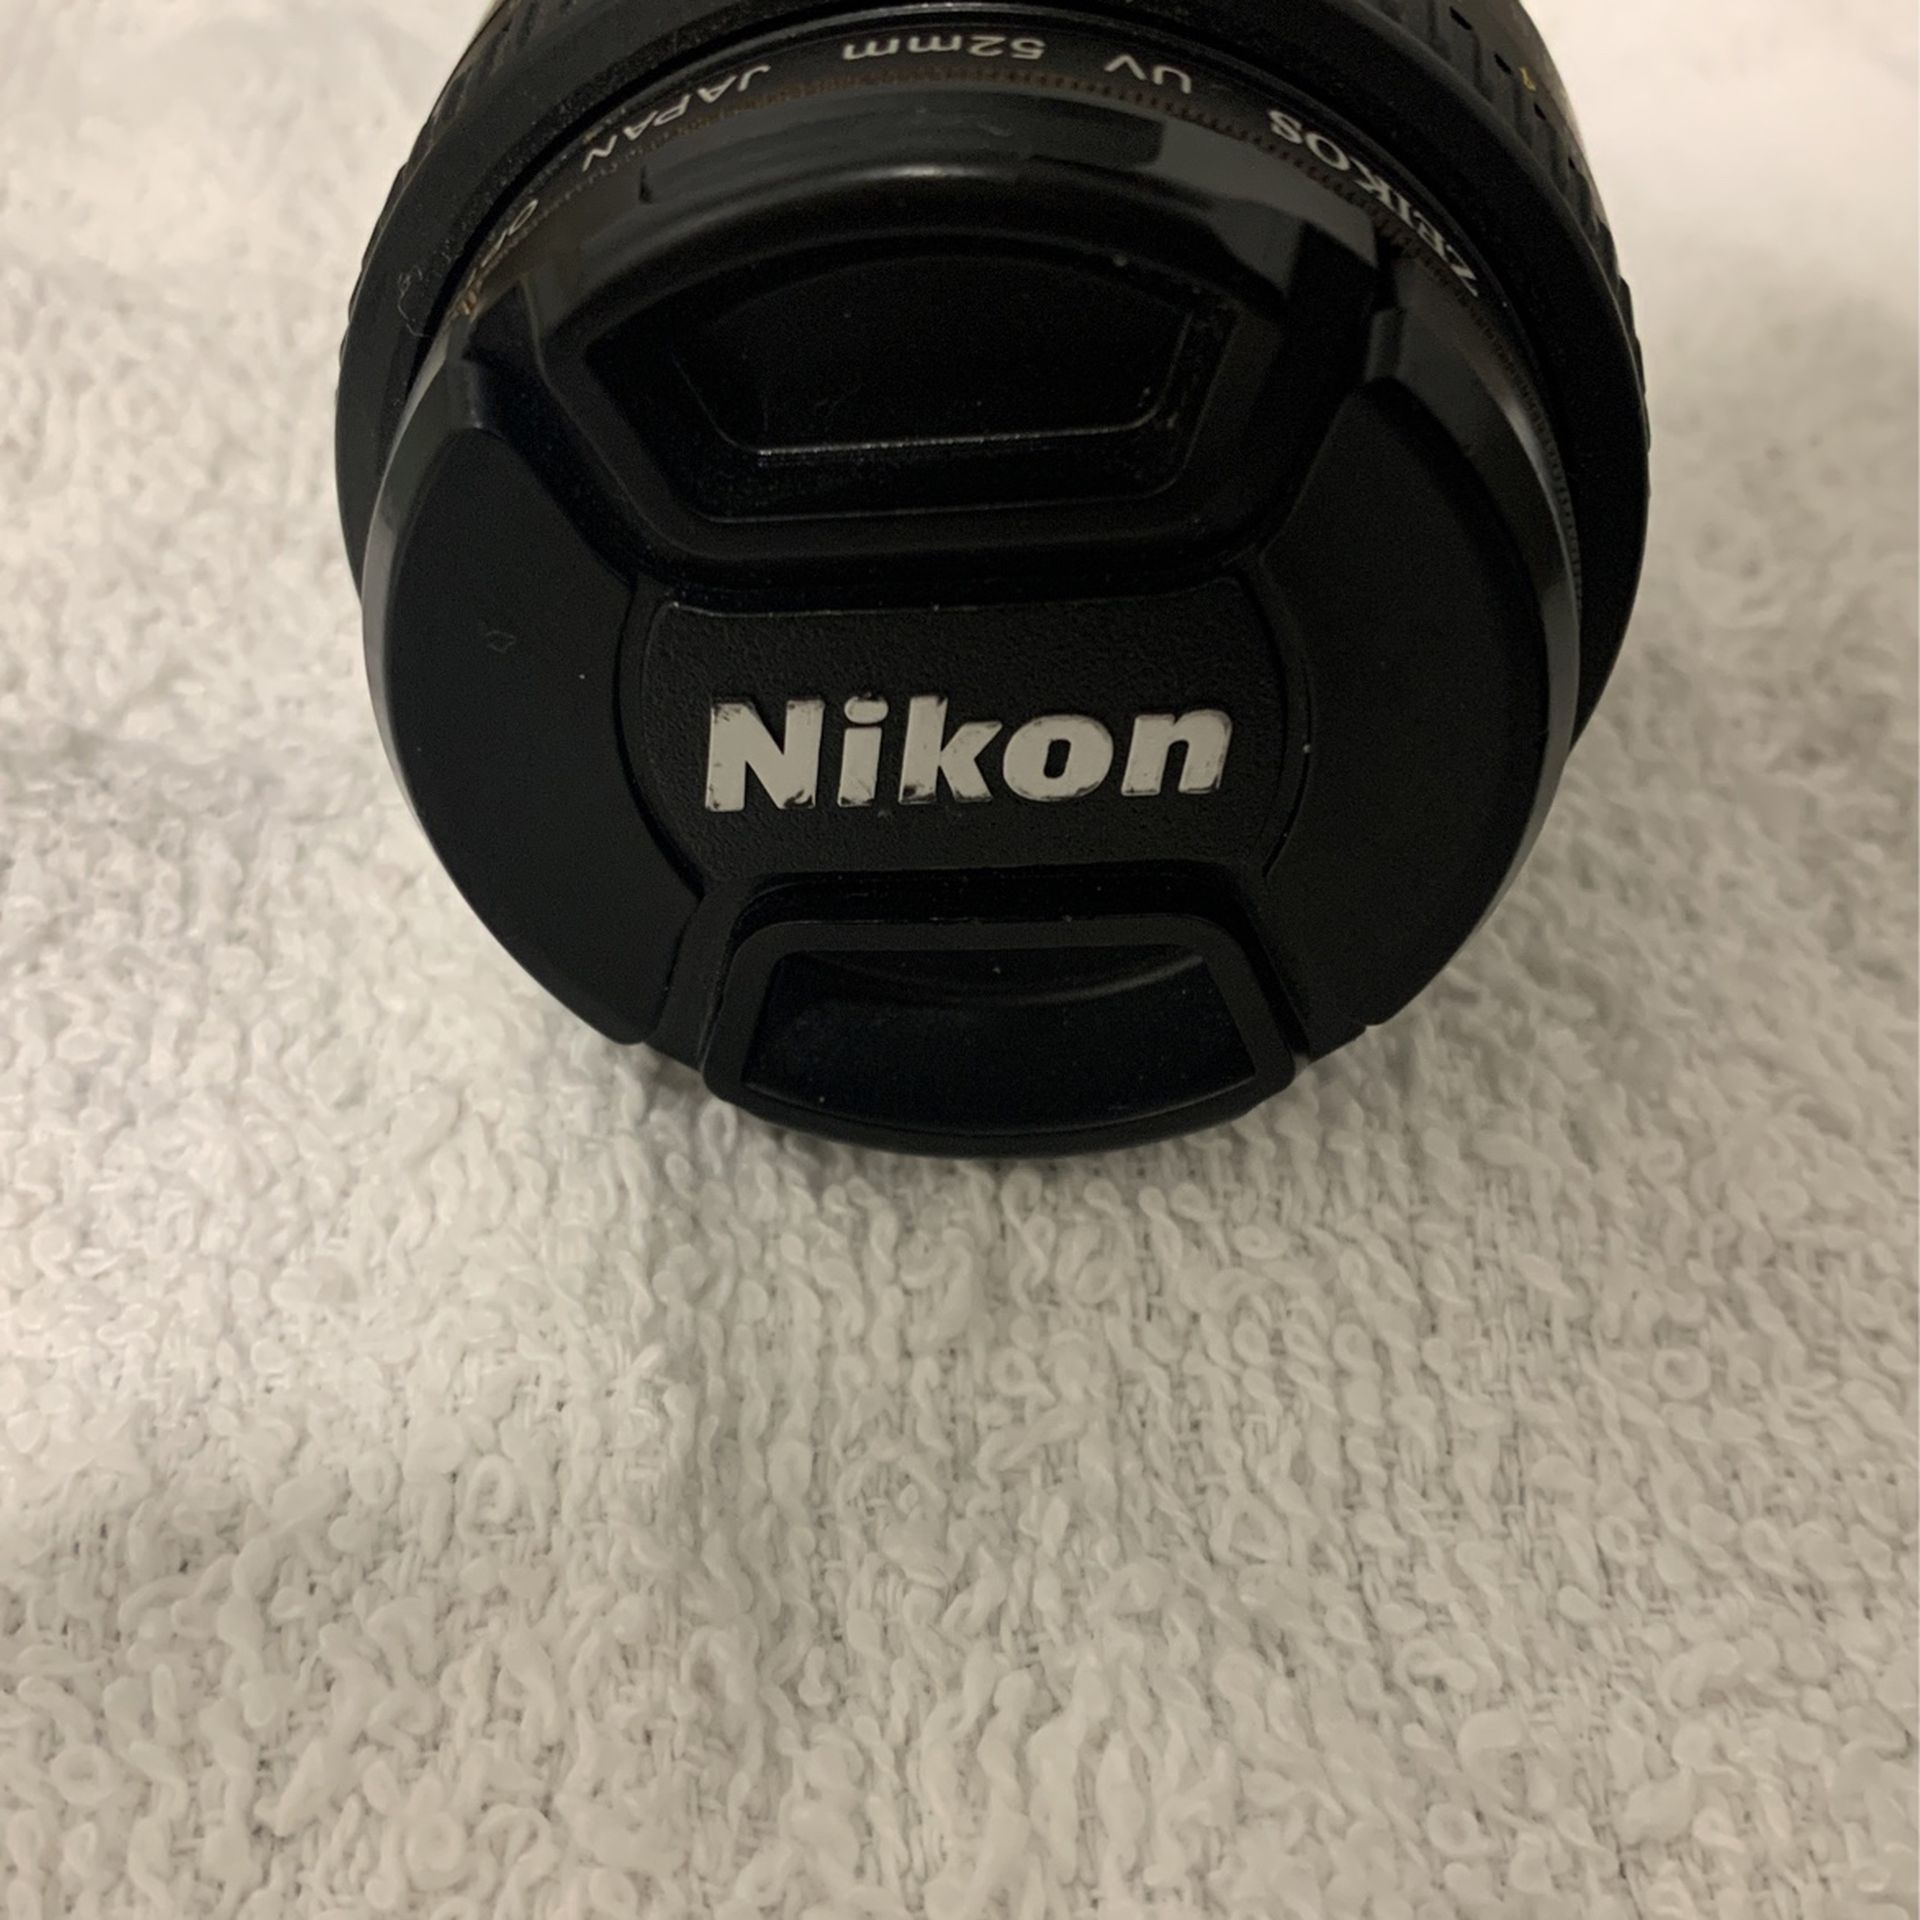 Nikon D7000 Like New